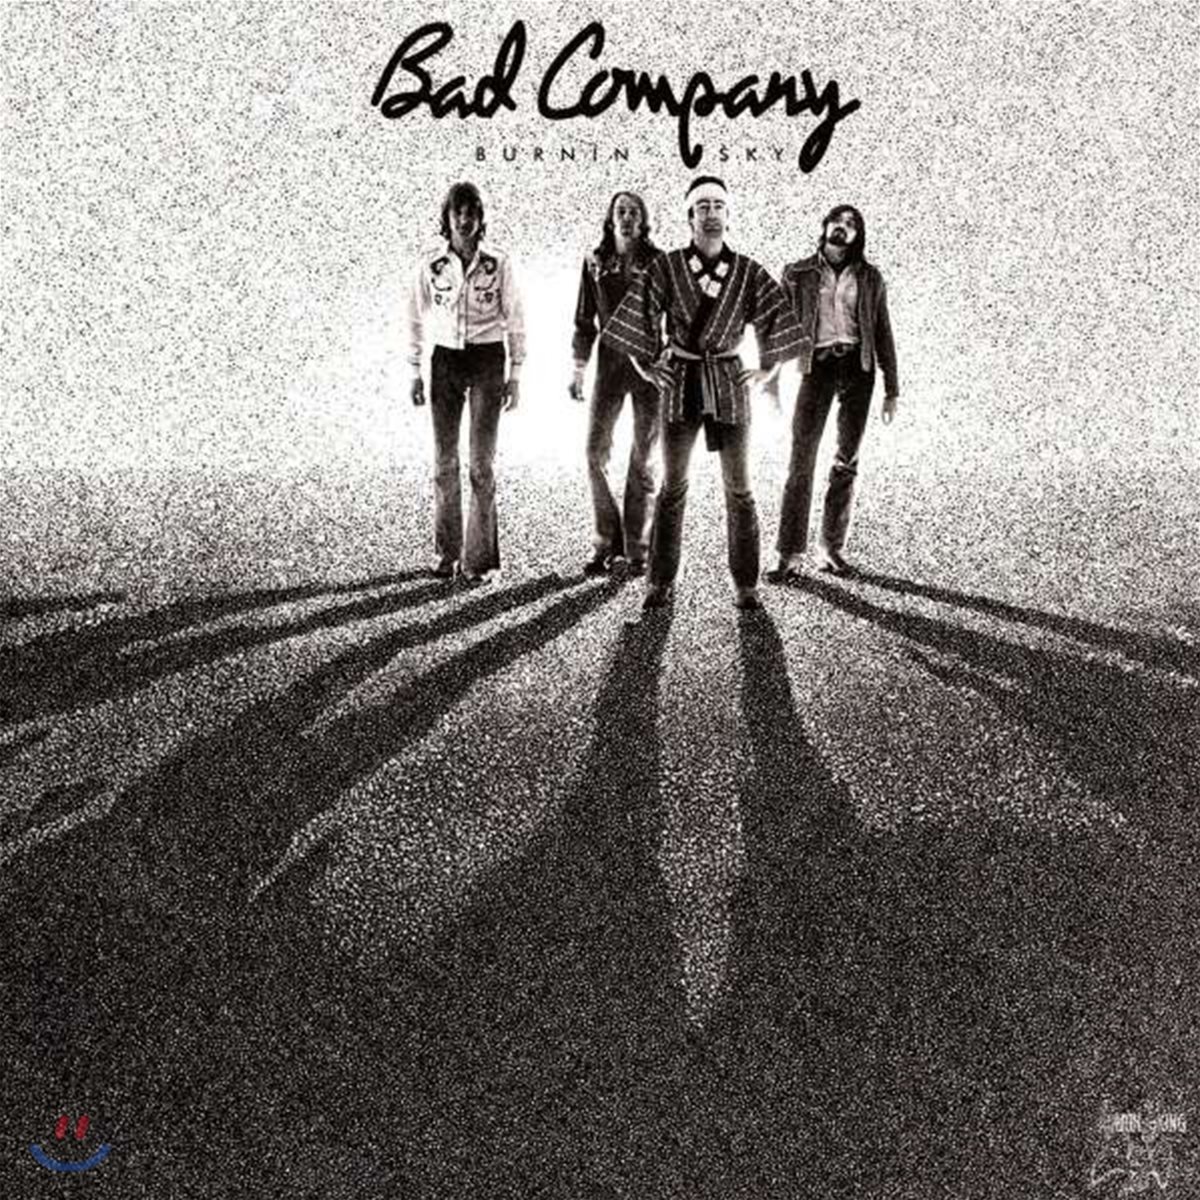 Bad Company (배드 컴퍼니) - Burnin' Sky [2 LP]